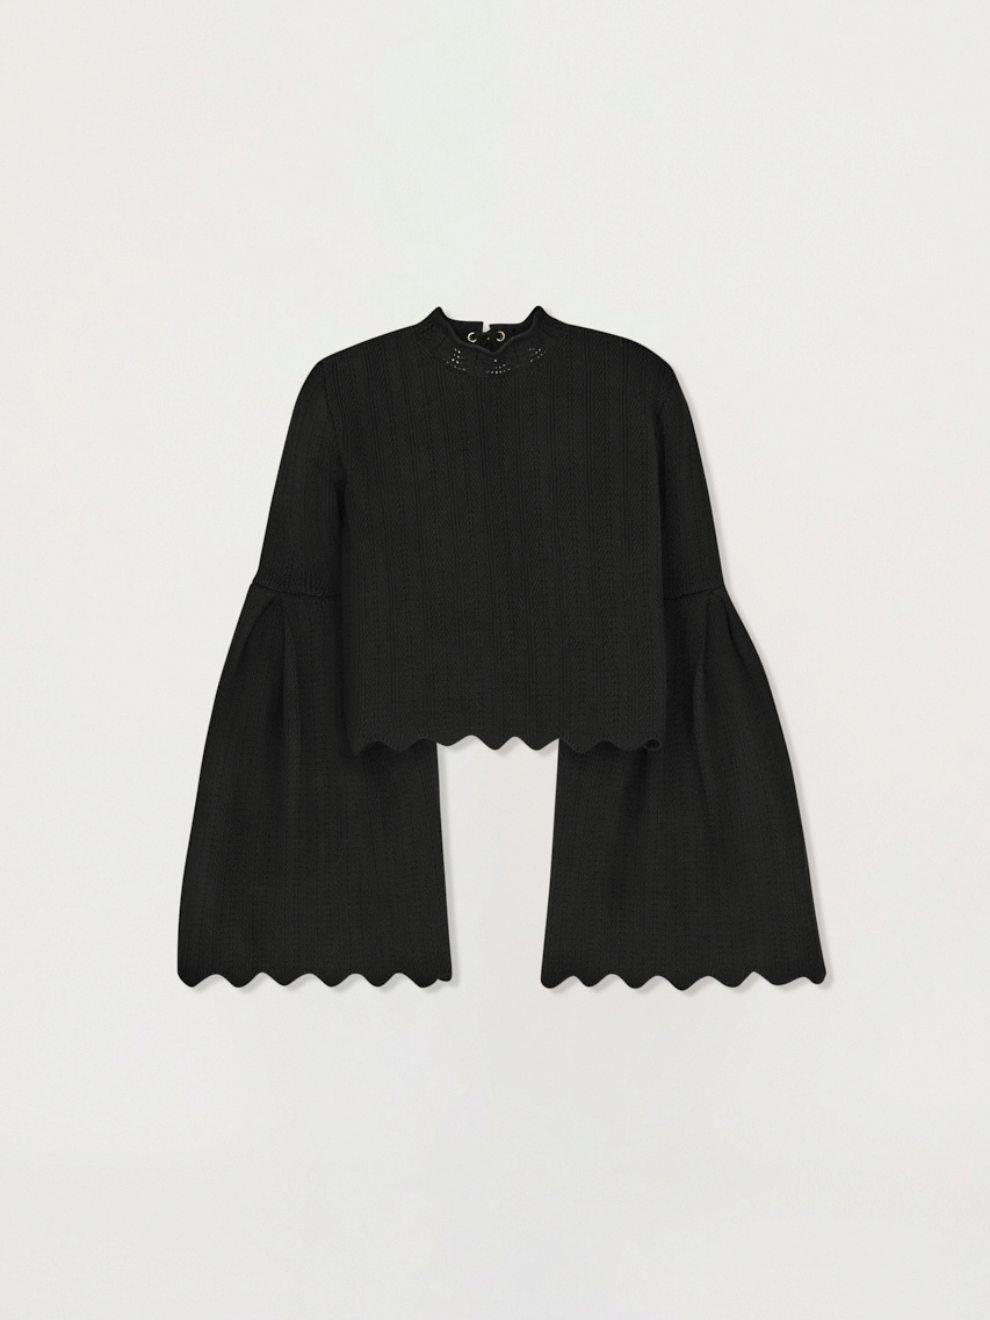 Chloe Knit Top in Black